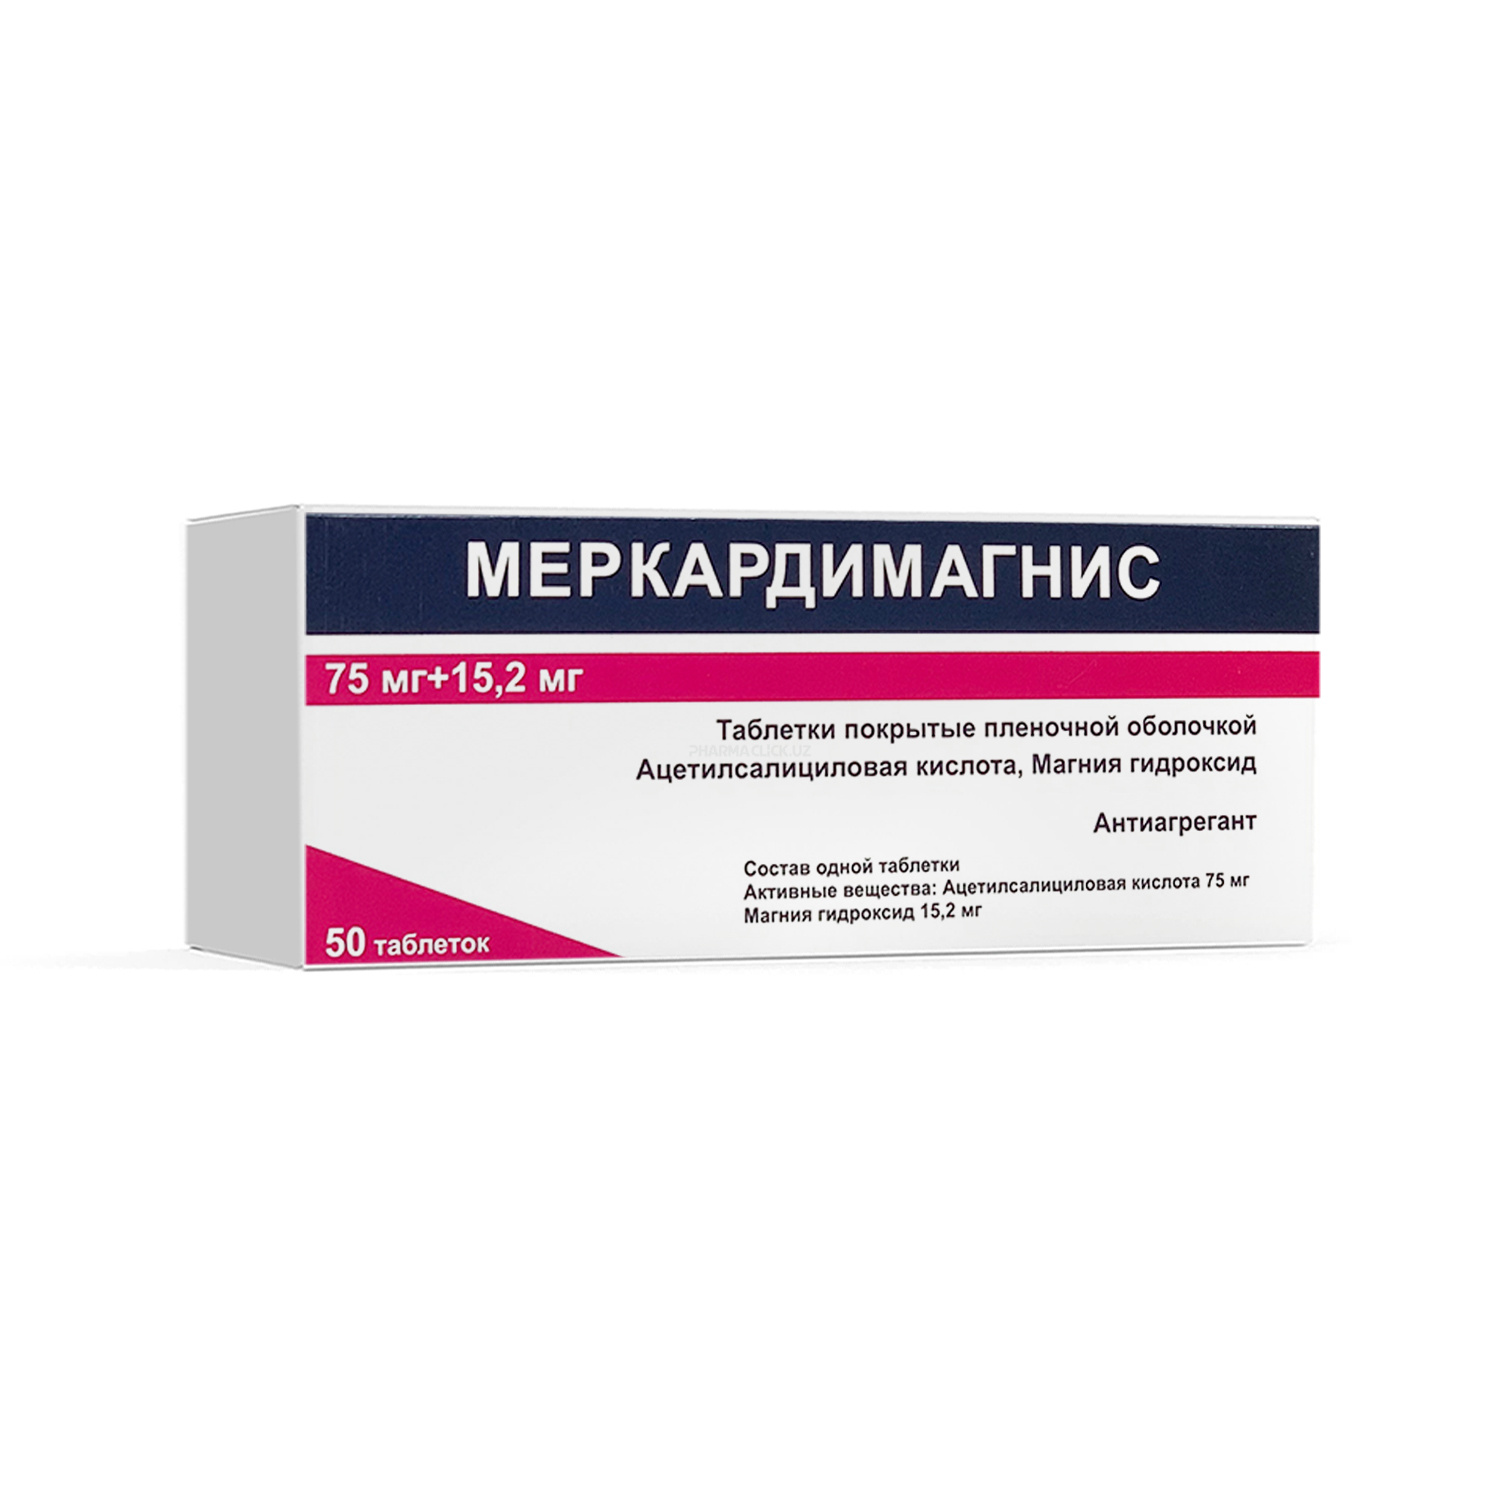 Kardimagnis 75 mg+15,2 mg №50 MR